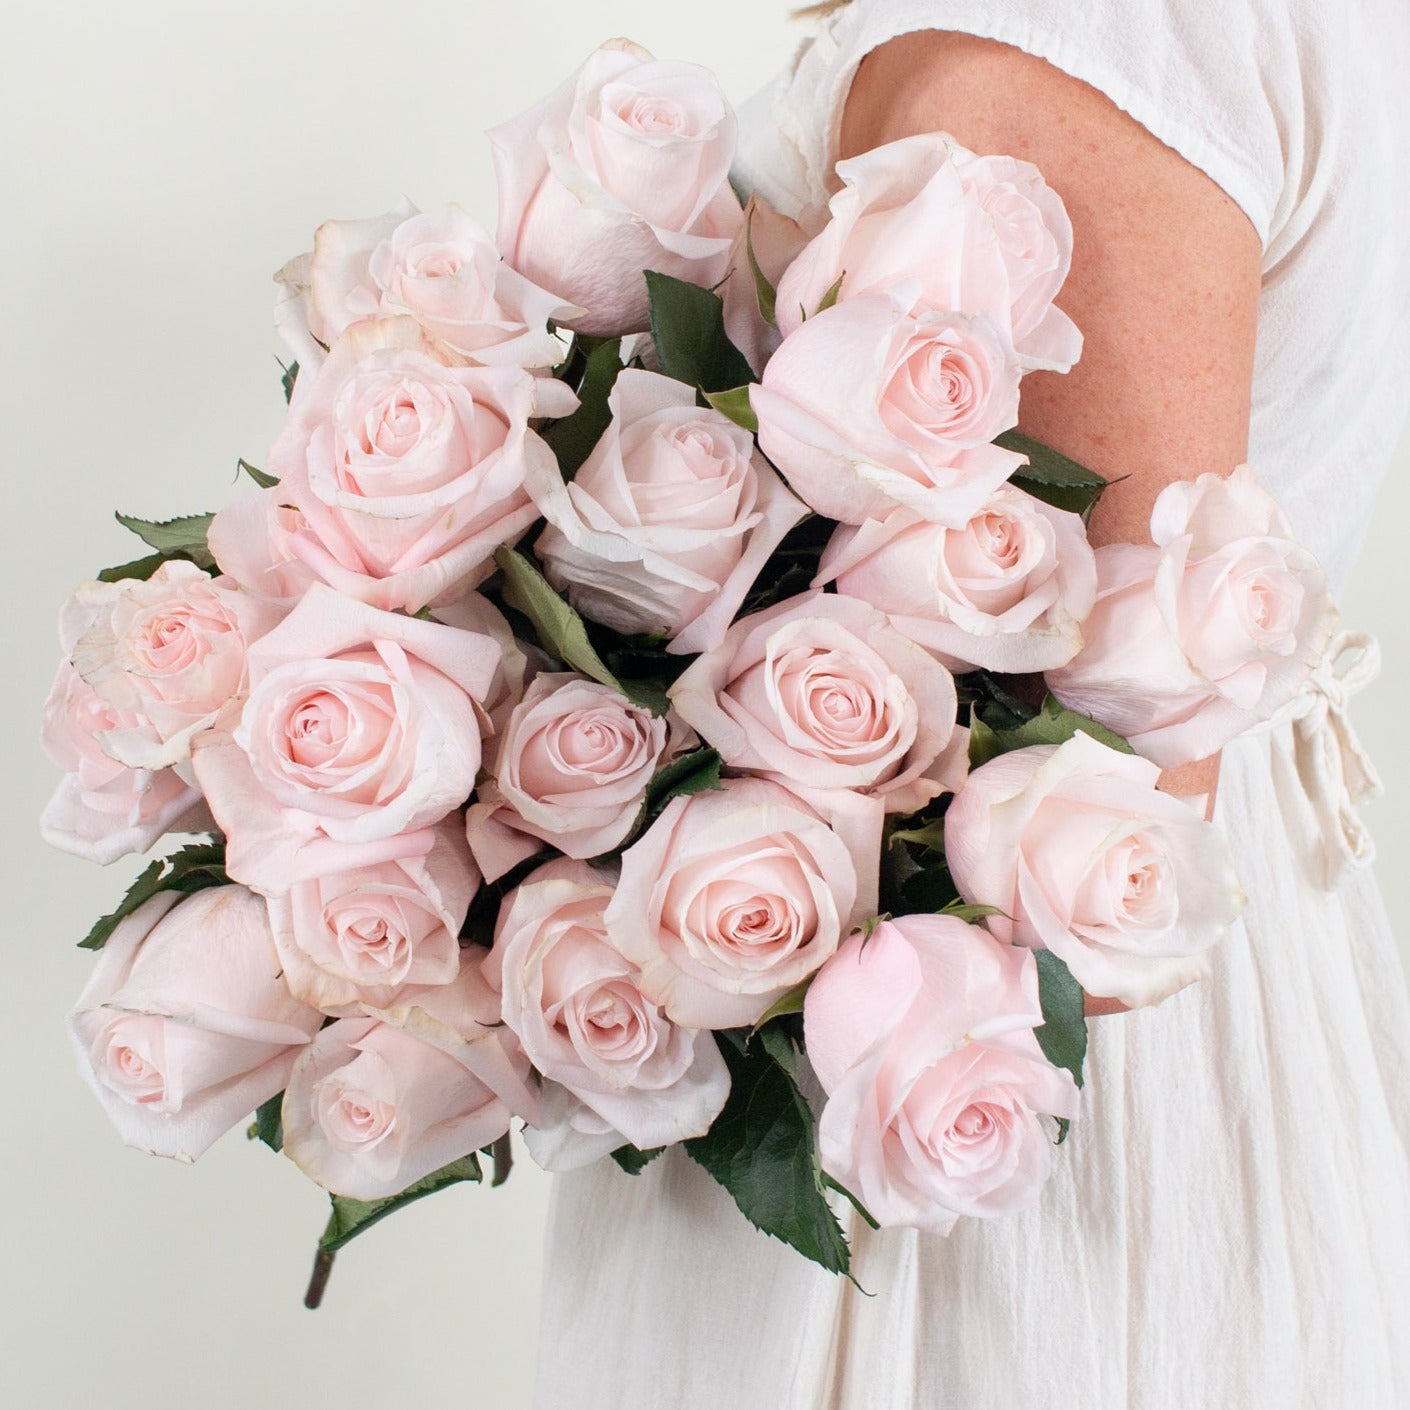 light pink/blush roses